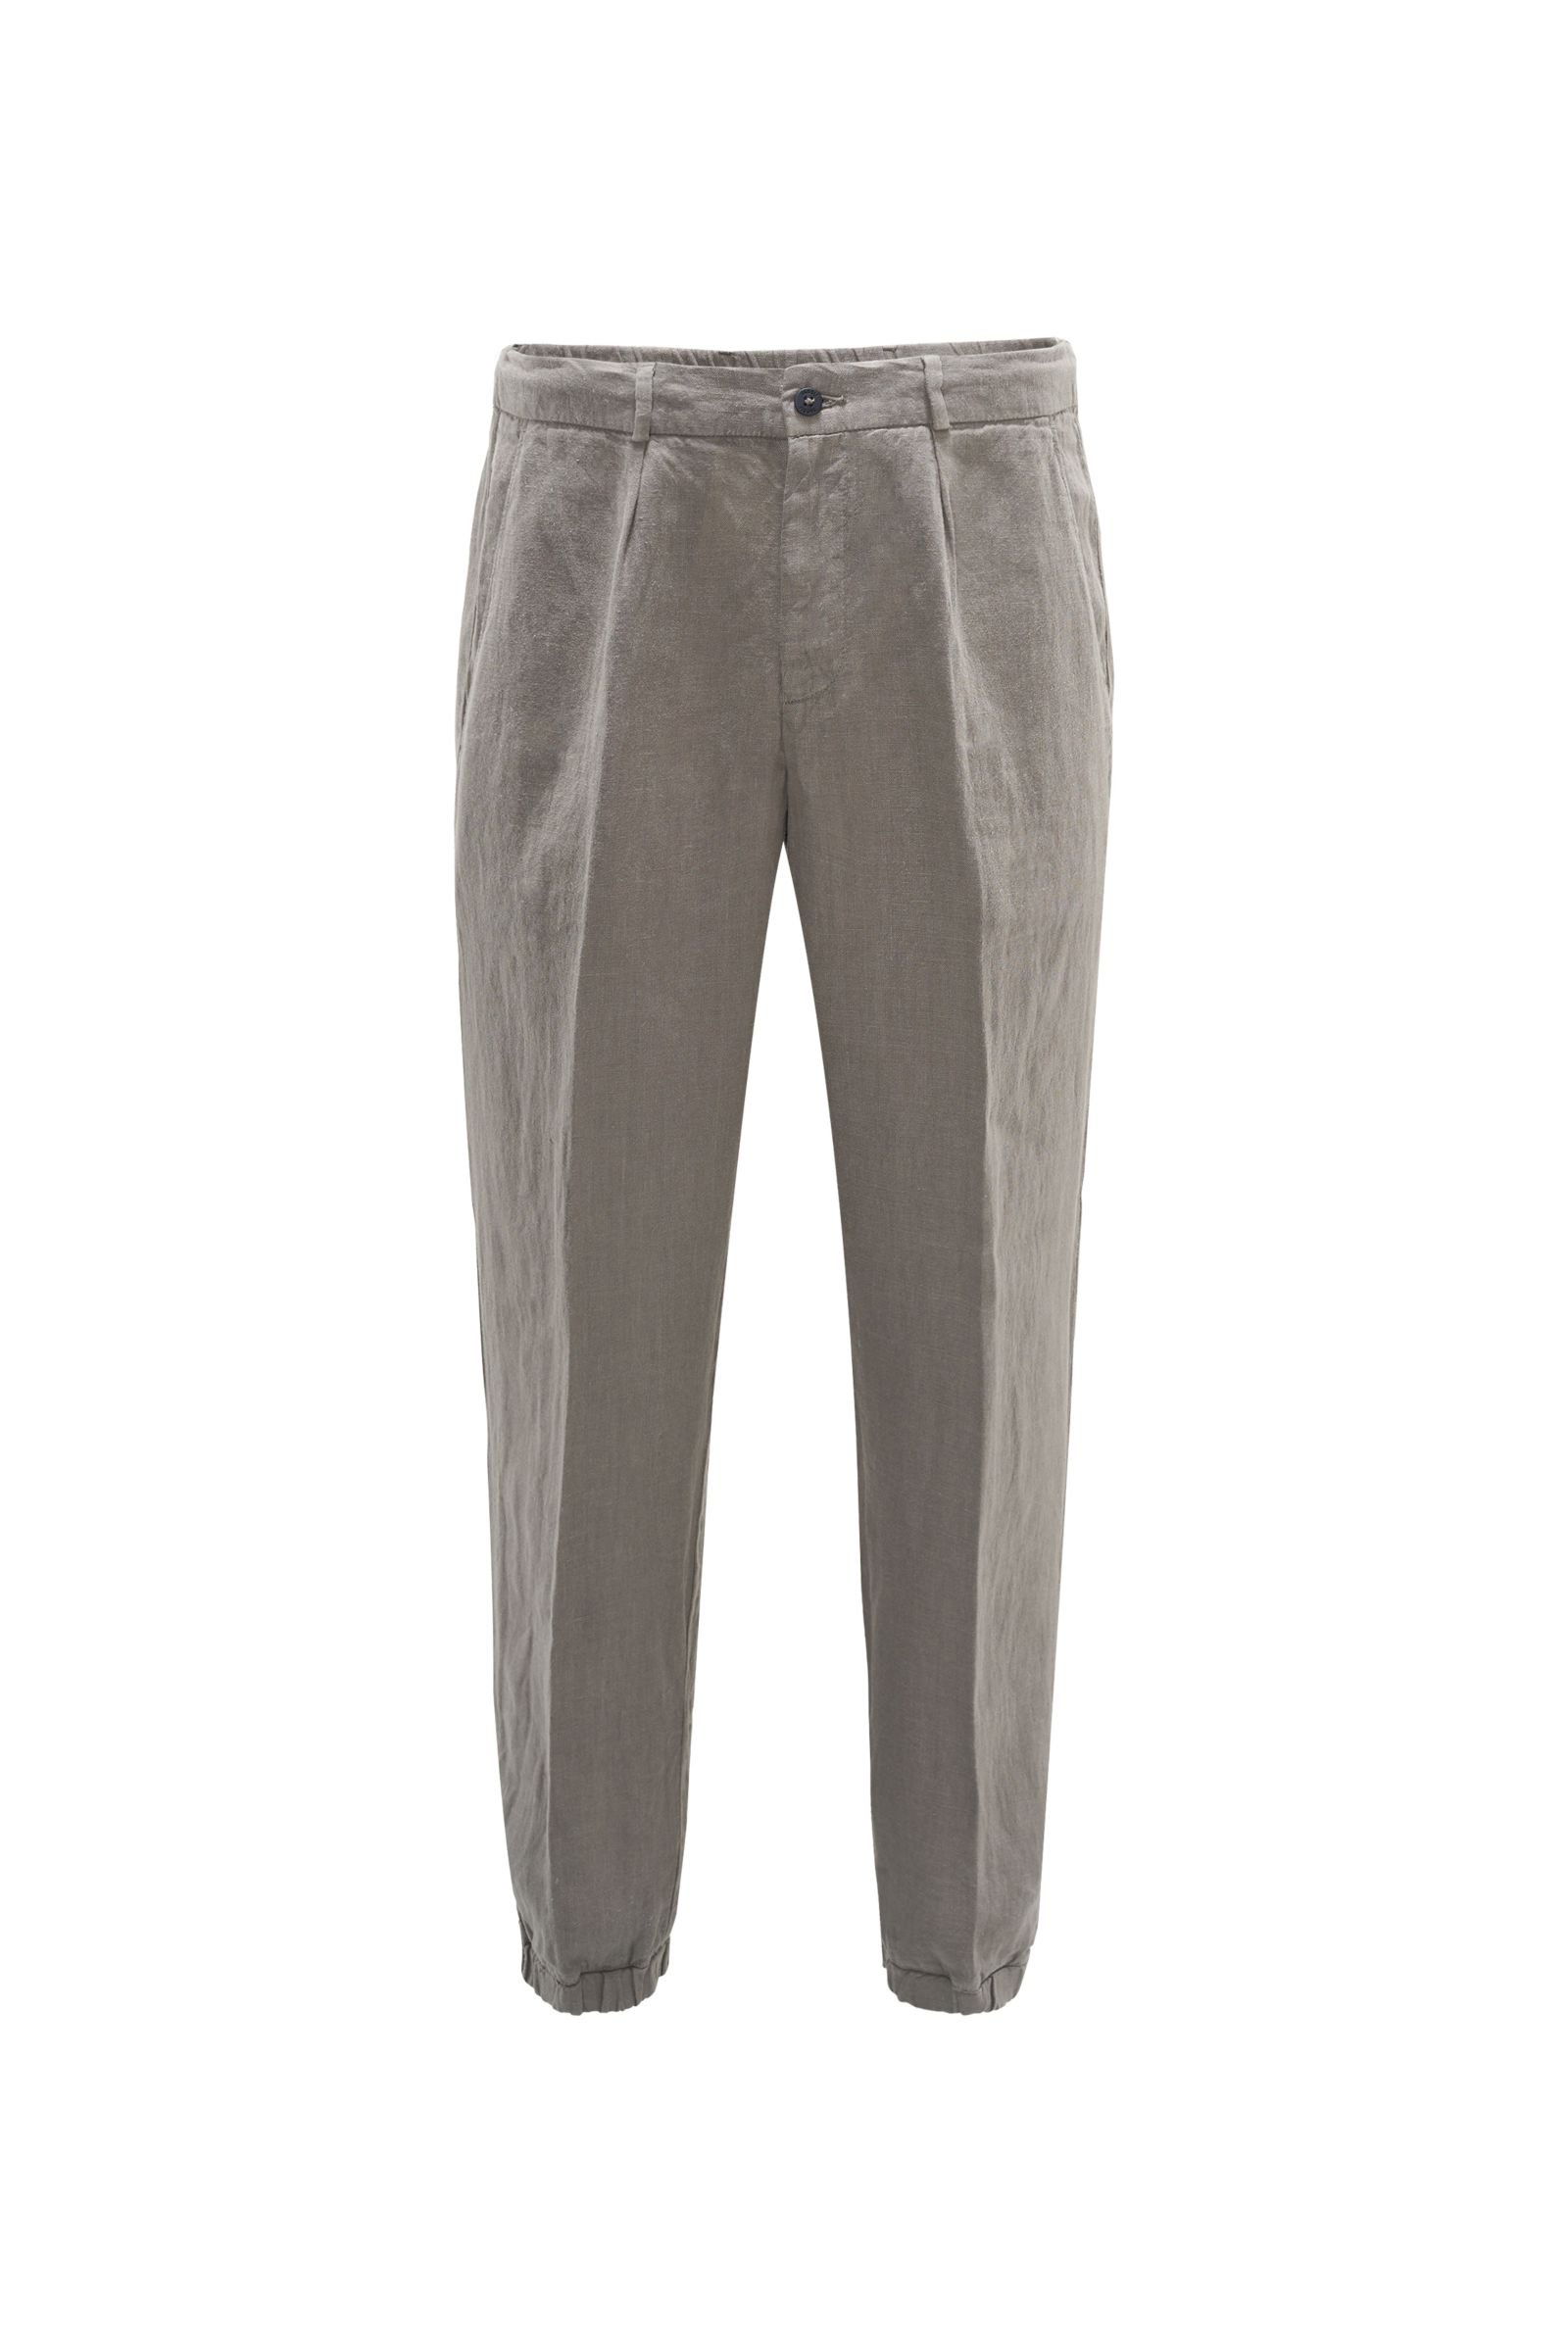 Linen jogger pants grey-brown